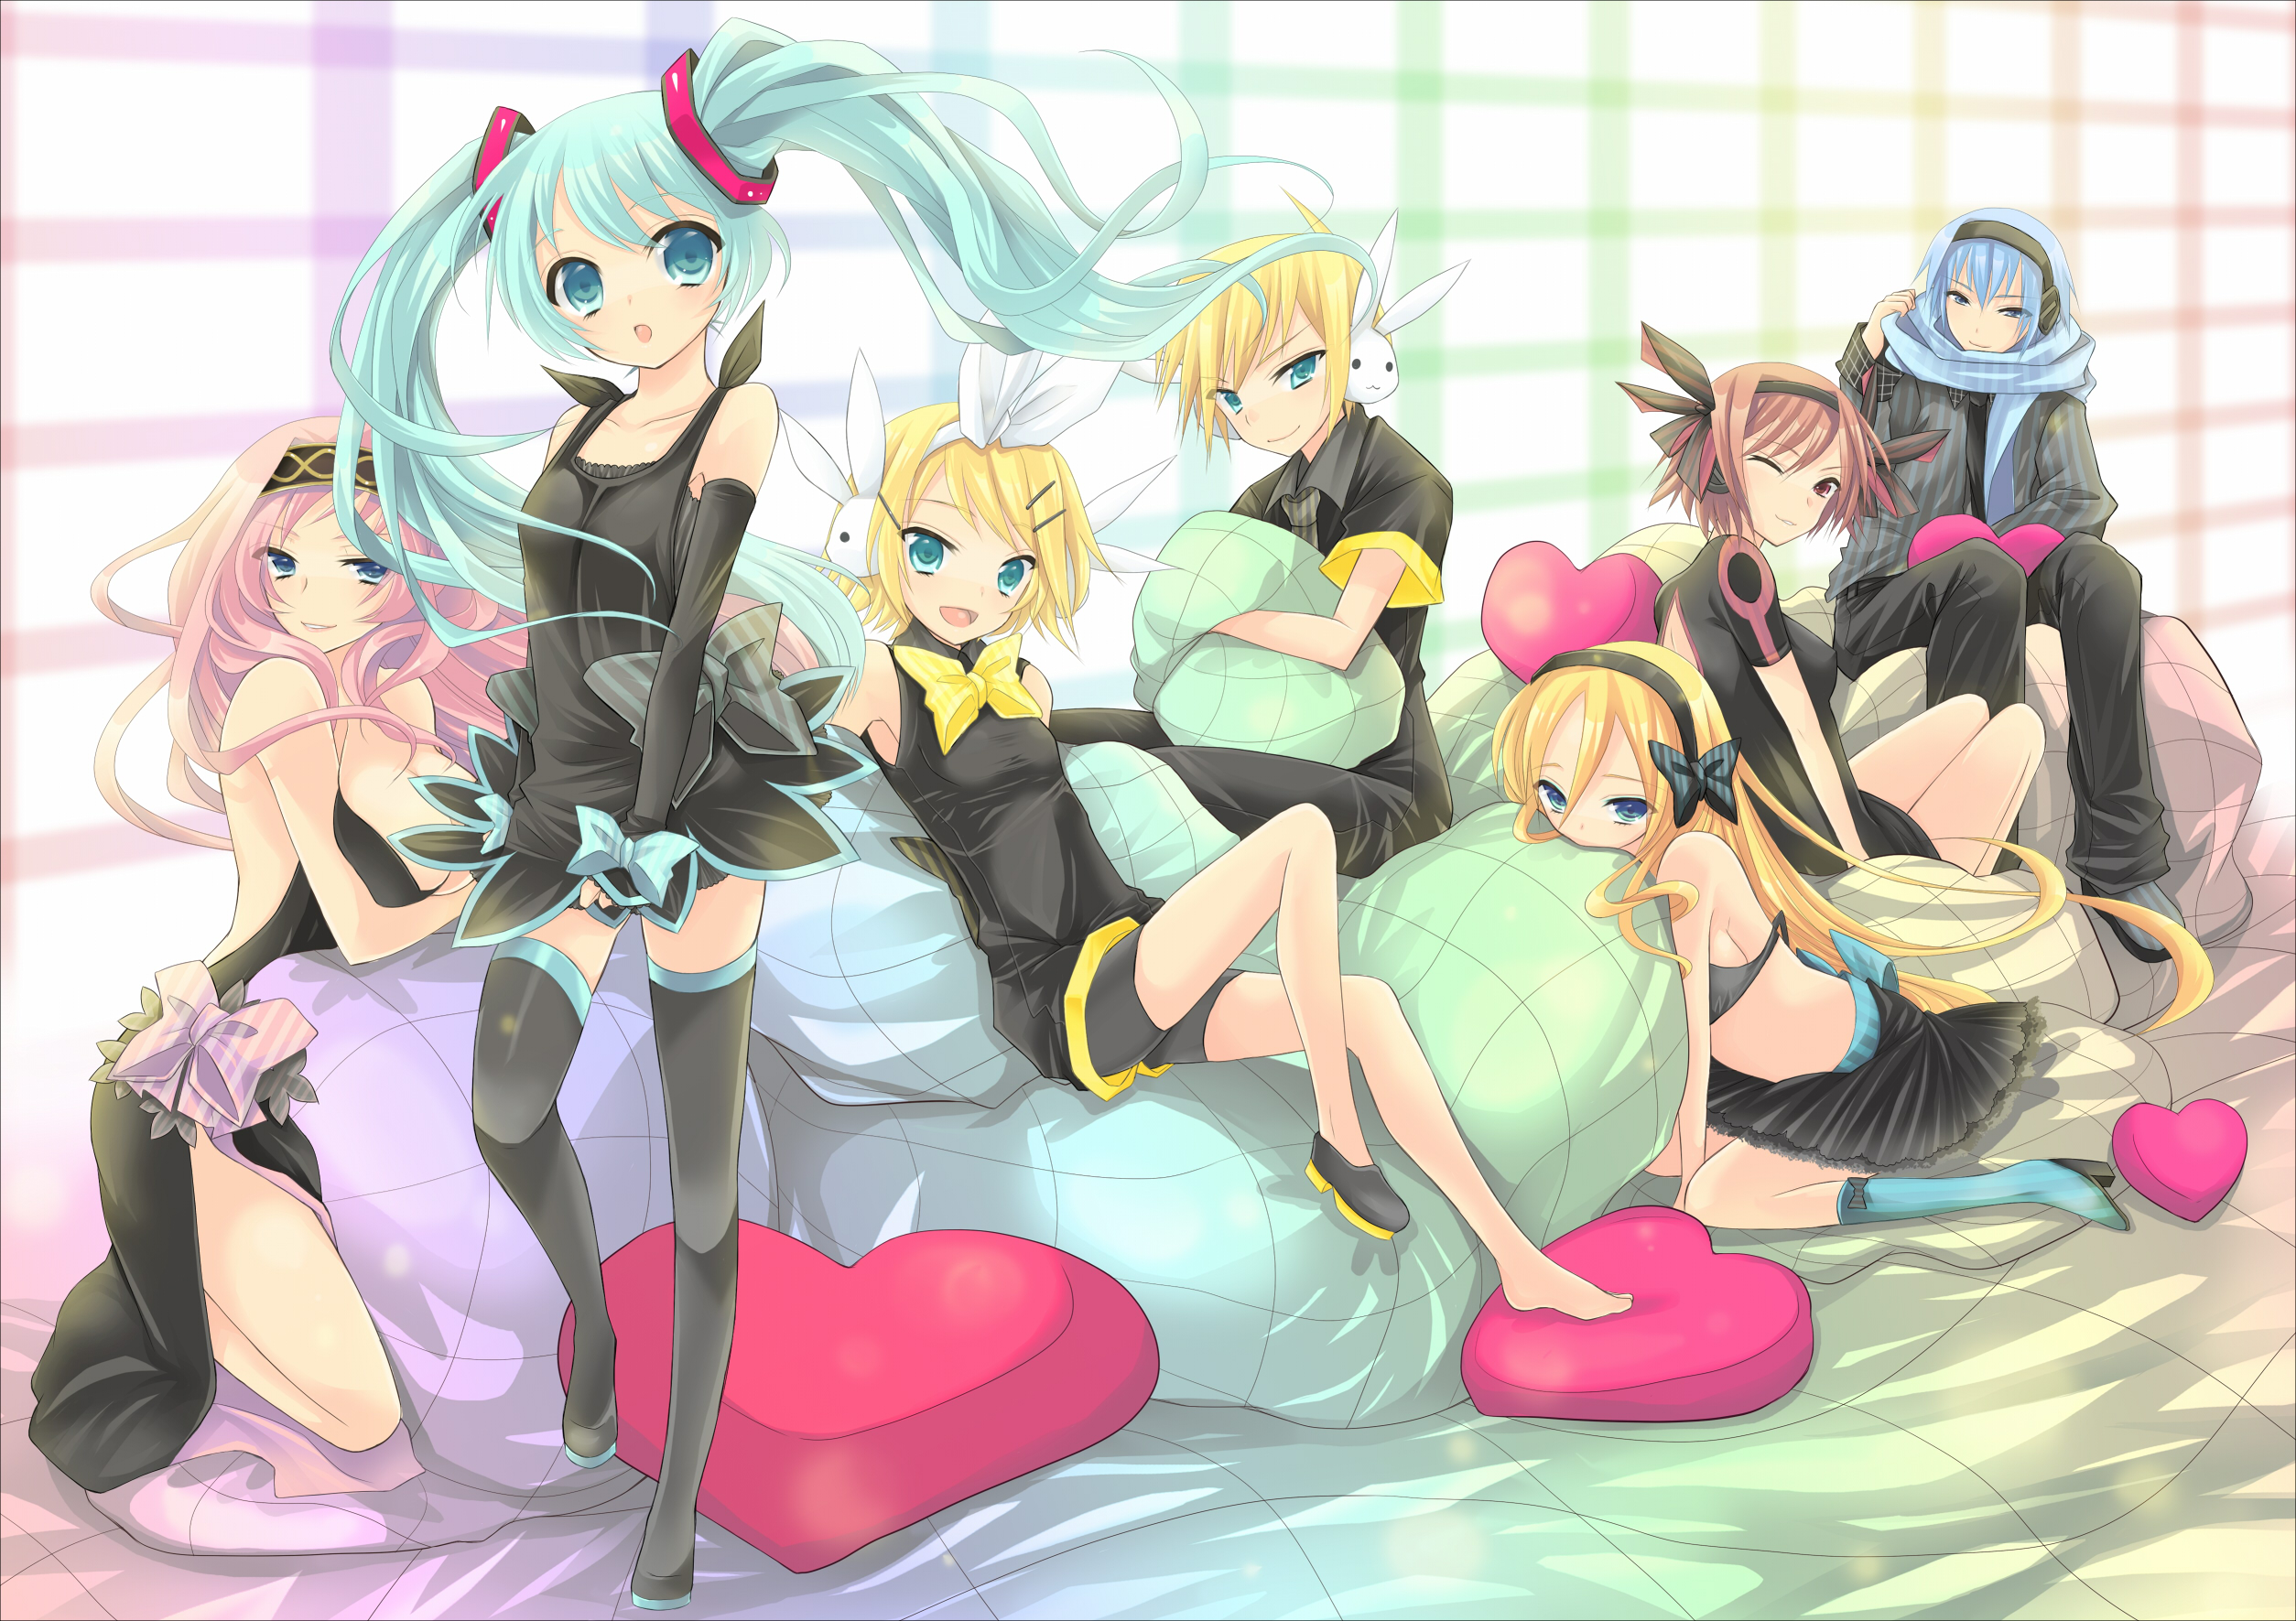 Descarga gratis la imagen Vocaloid, Luka Megurine, Animado, Hatsune Miku, Rin Kagamine, Kaito (Vocaloid), Len Kagamine, Meiko (Vocaloid), Lirio (Vocaloid) en el escritorio de tu PC